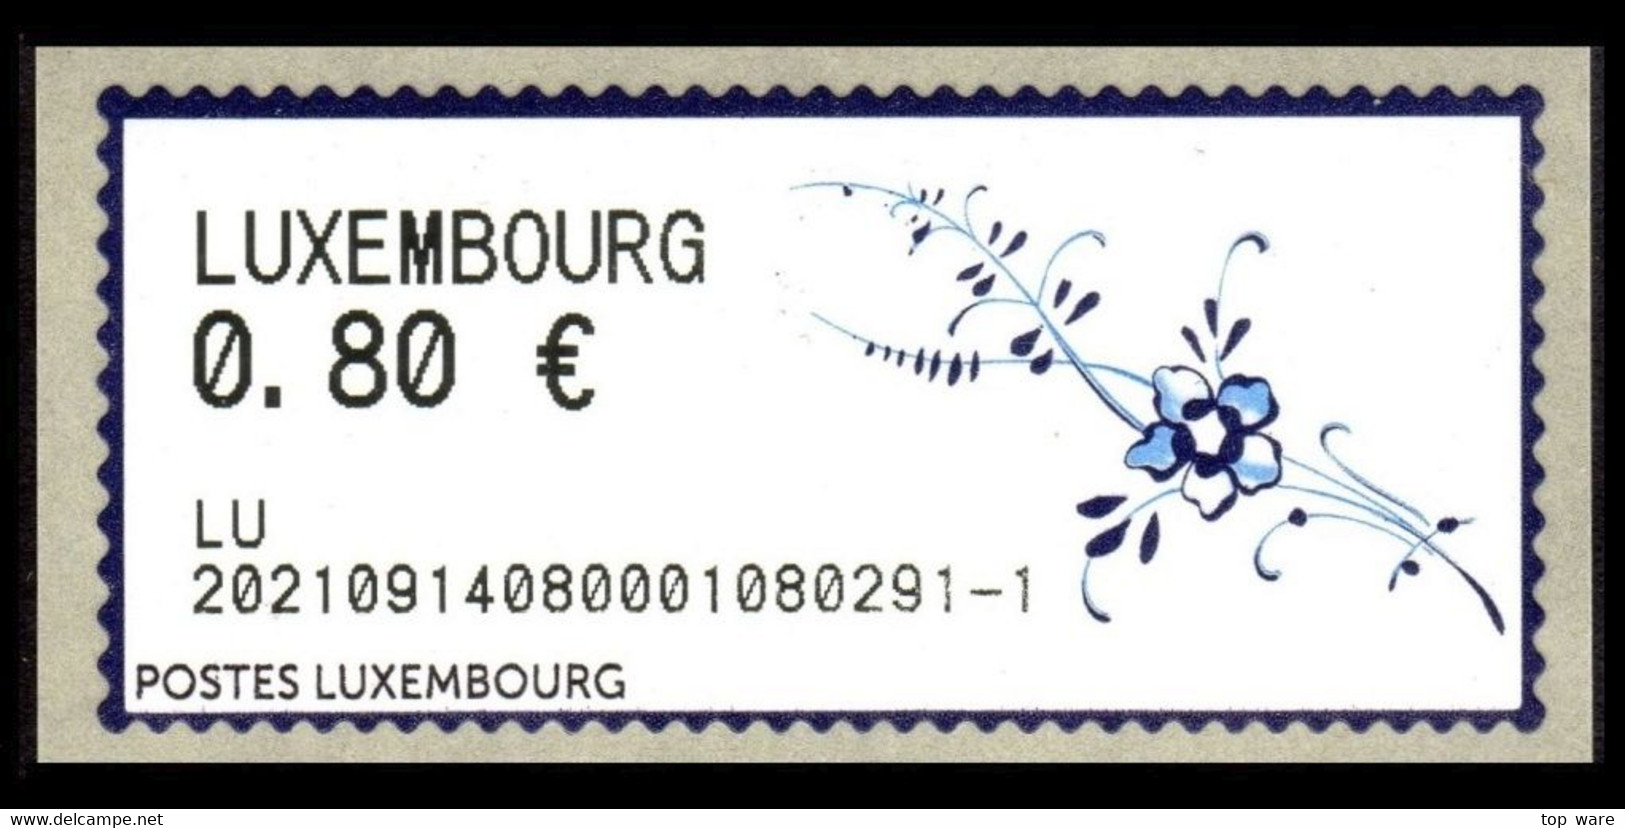 Luxemburg Luxembourg Timbres ATM 1-9 / Automatenmarken 1983-2021 komplett, postfrisch / distributeurs etiquetas